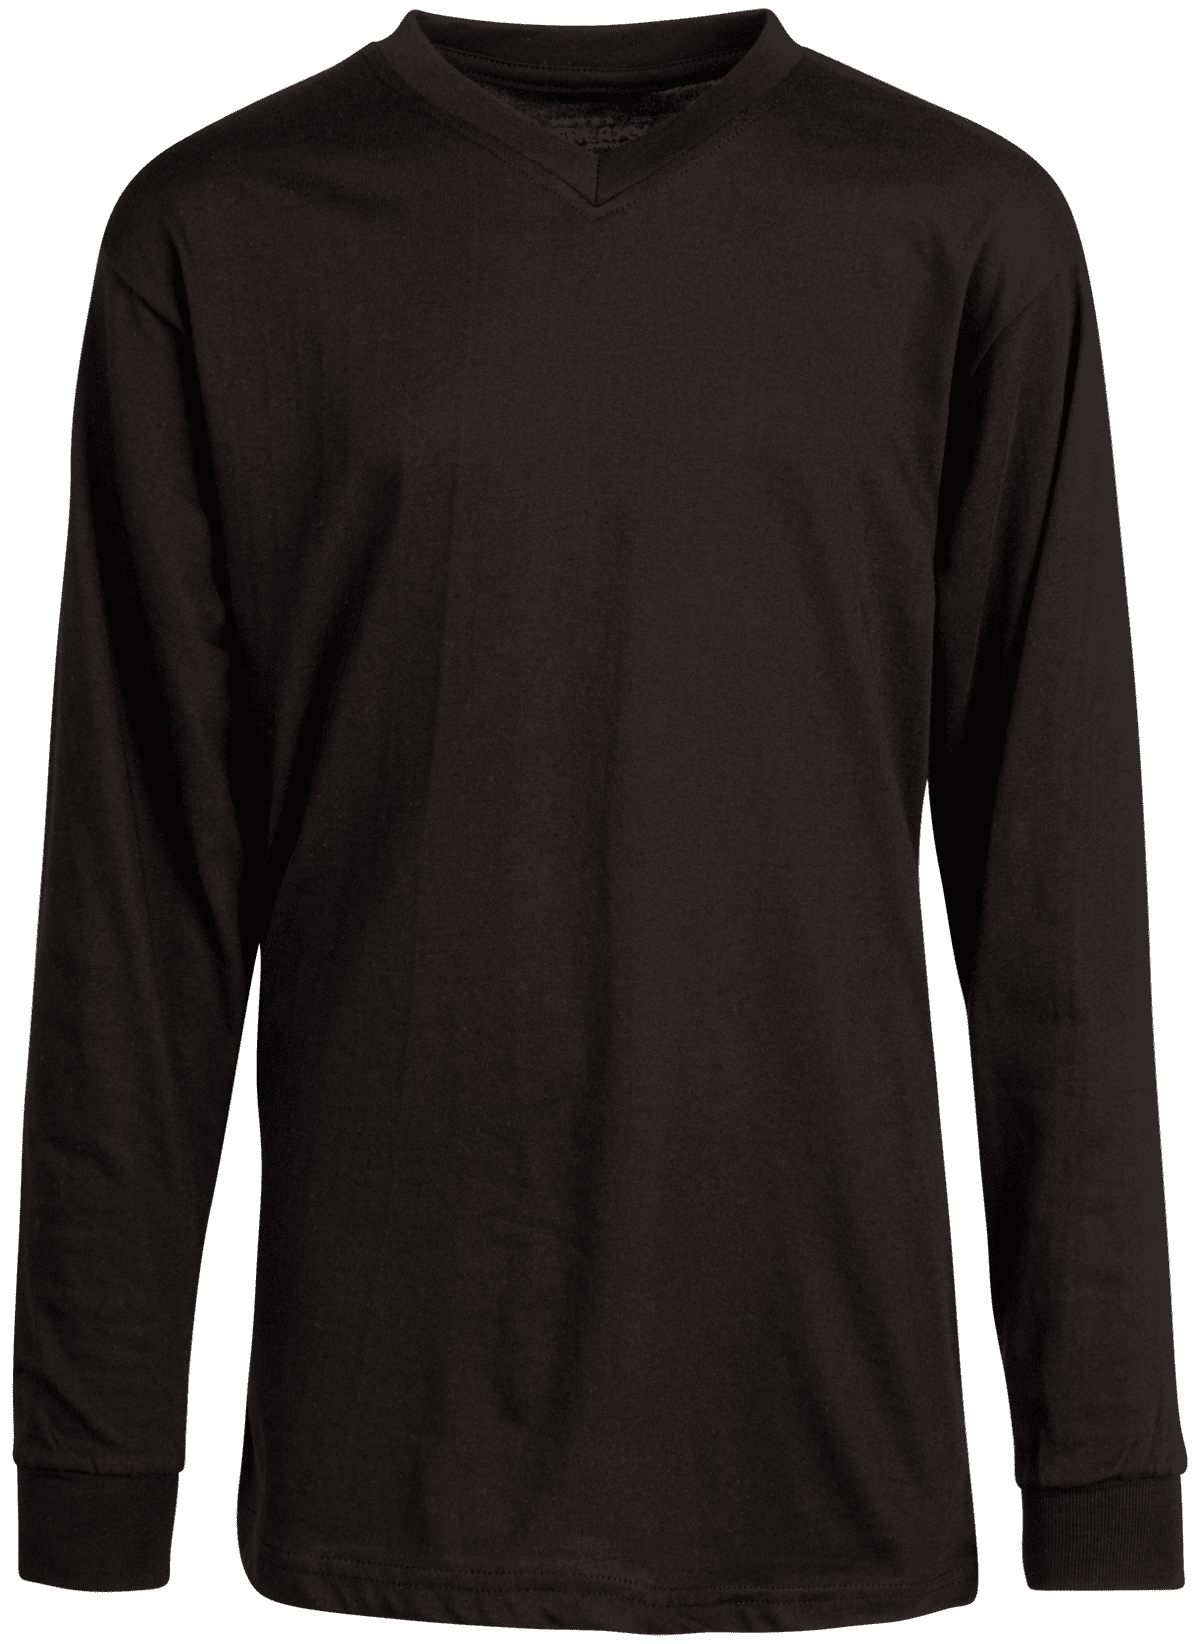 Solid Basic Tagless V-Neck Knit Top 4 Pack Galaxy by Harvic Boys' Long Sleeve Tee Shirt 